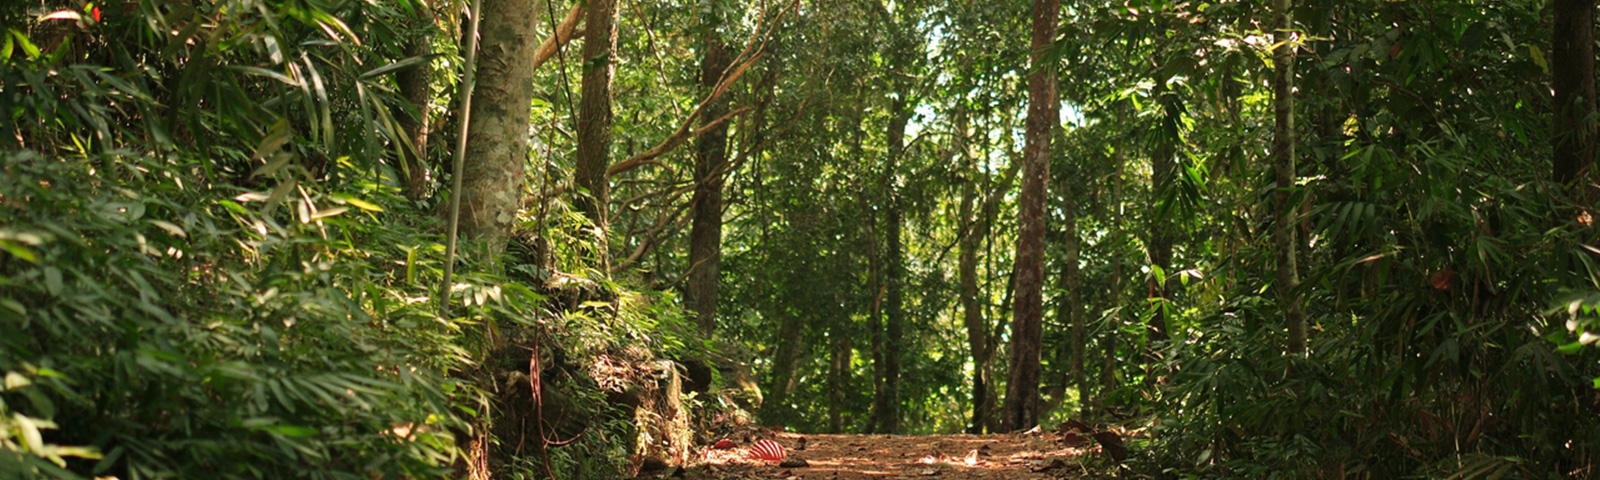 Bodhinagala Forest Reserve, Sri Lanka